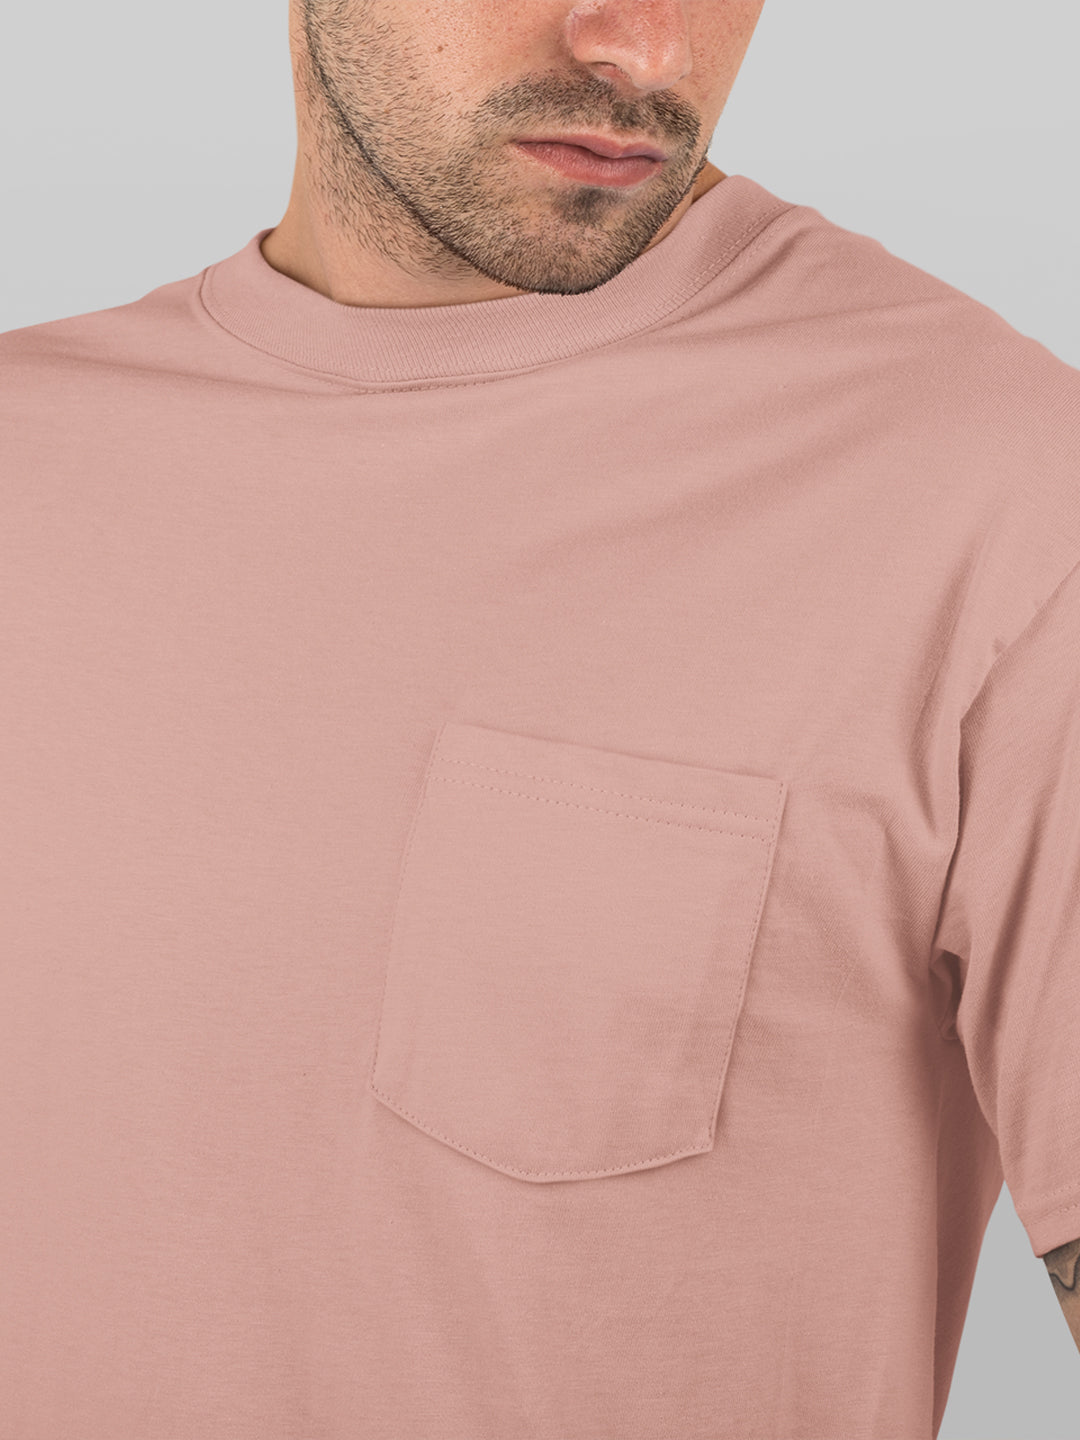 Premium Plain T-shirt : Salmon Pink